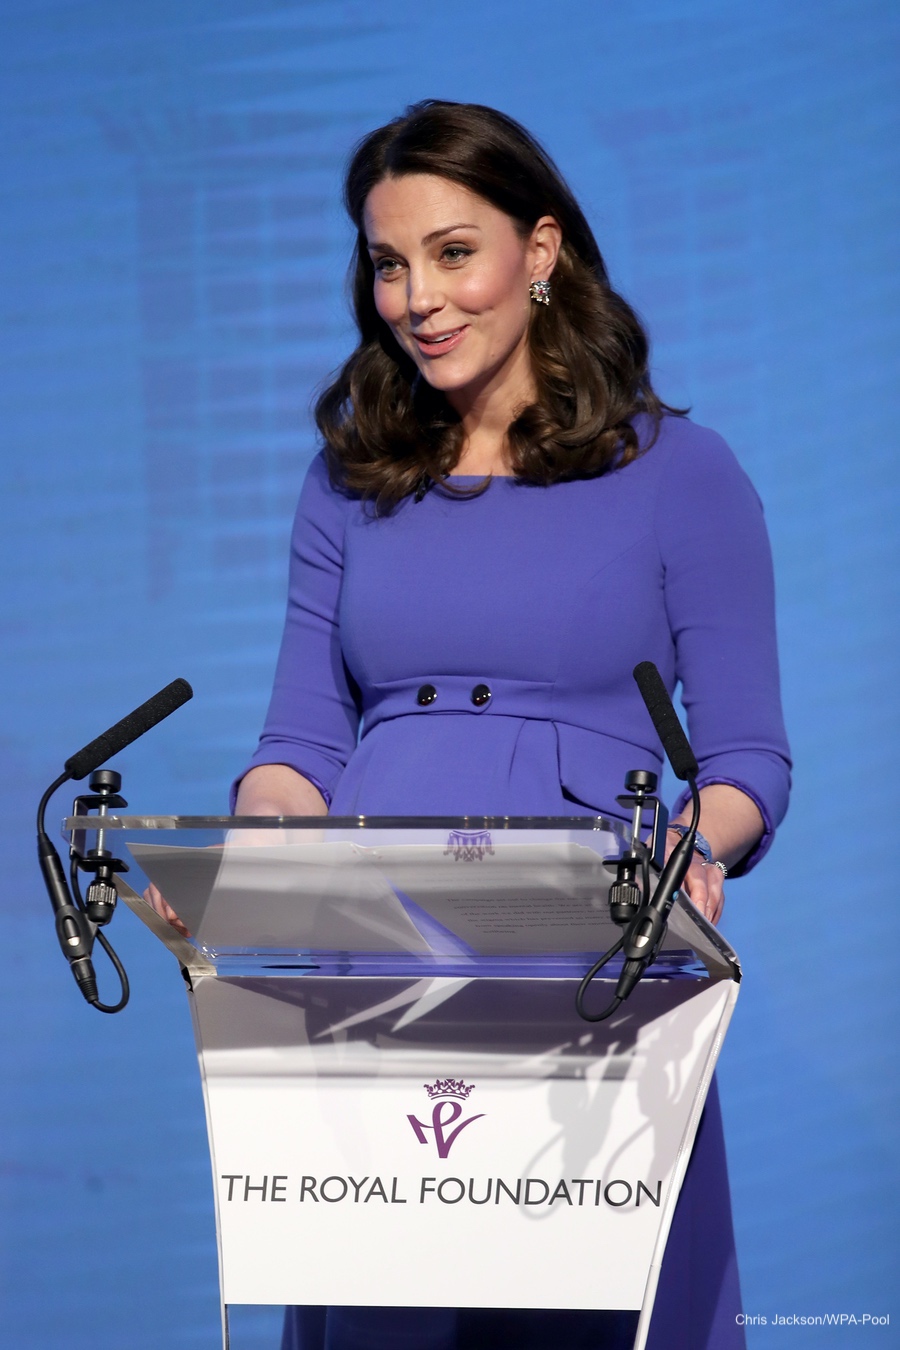 Kate delivering her speech